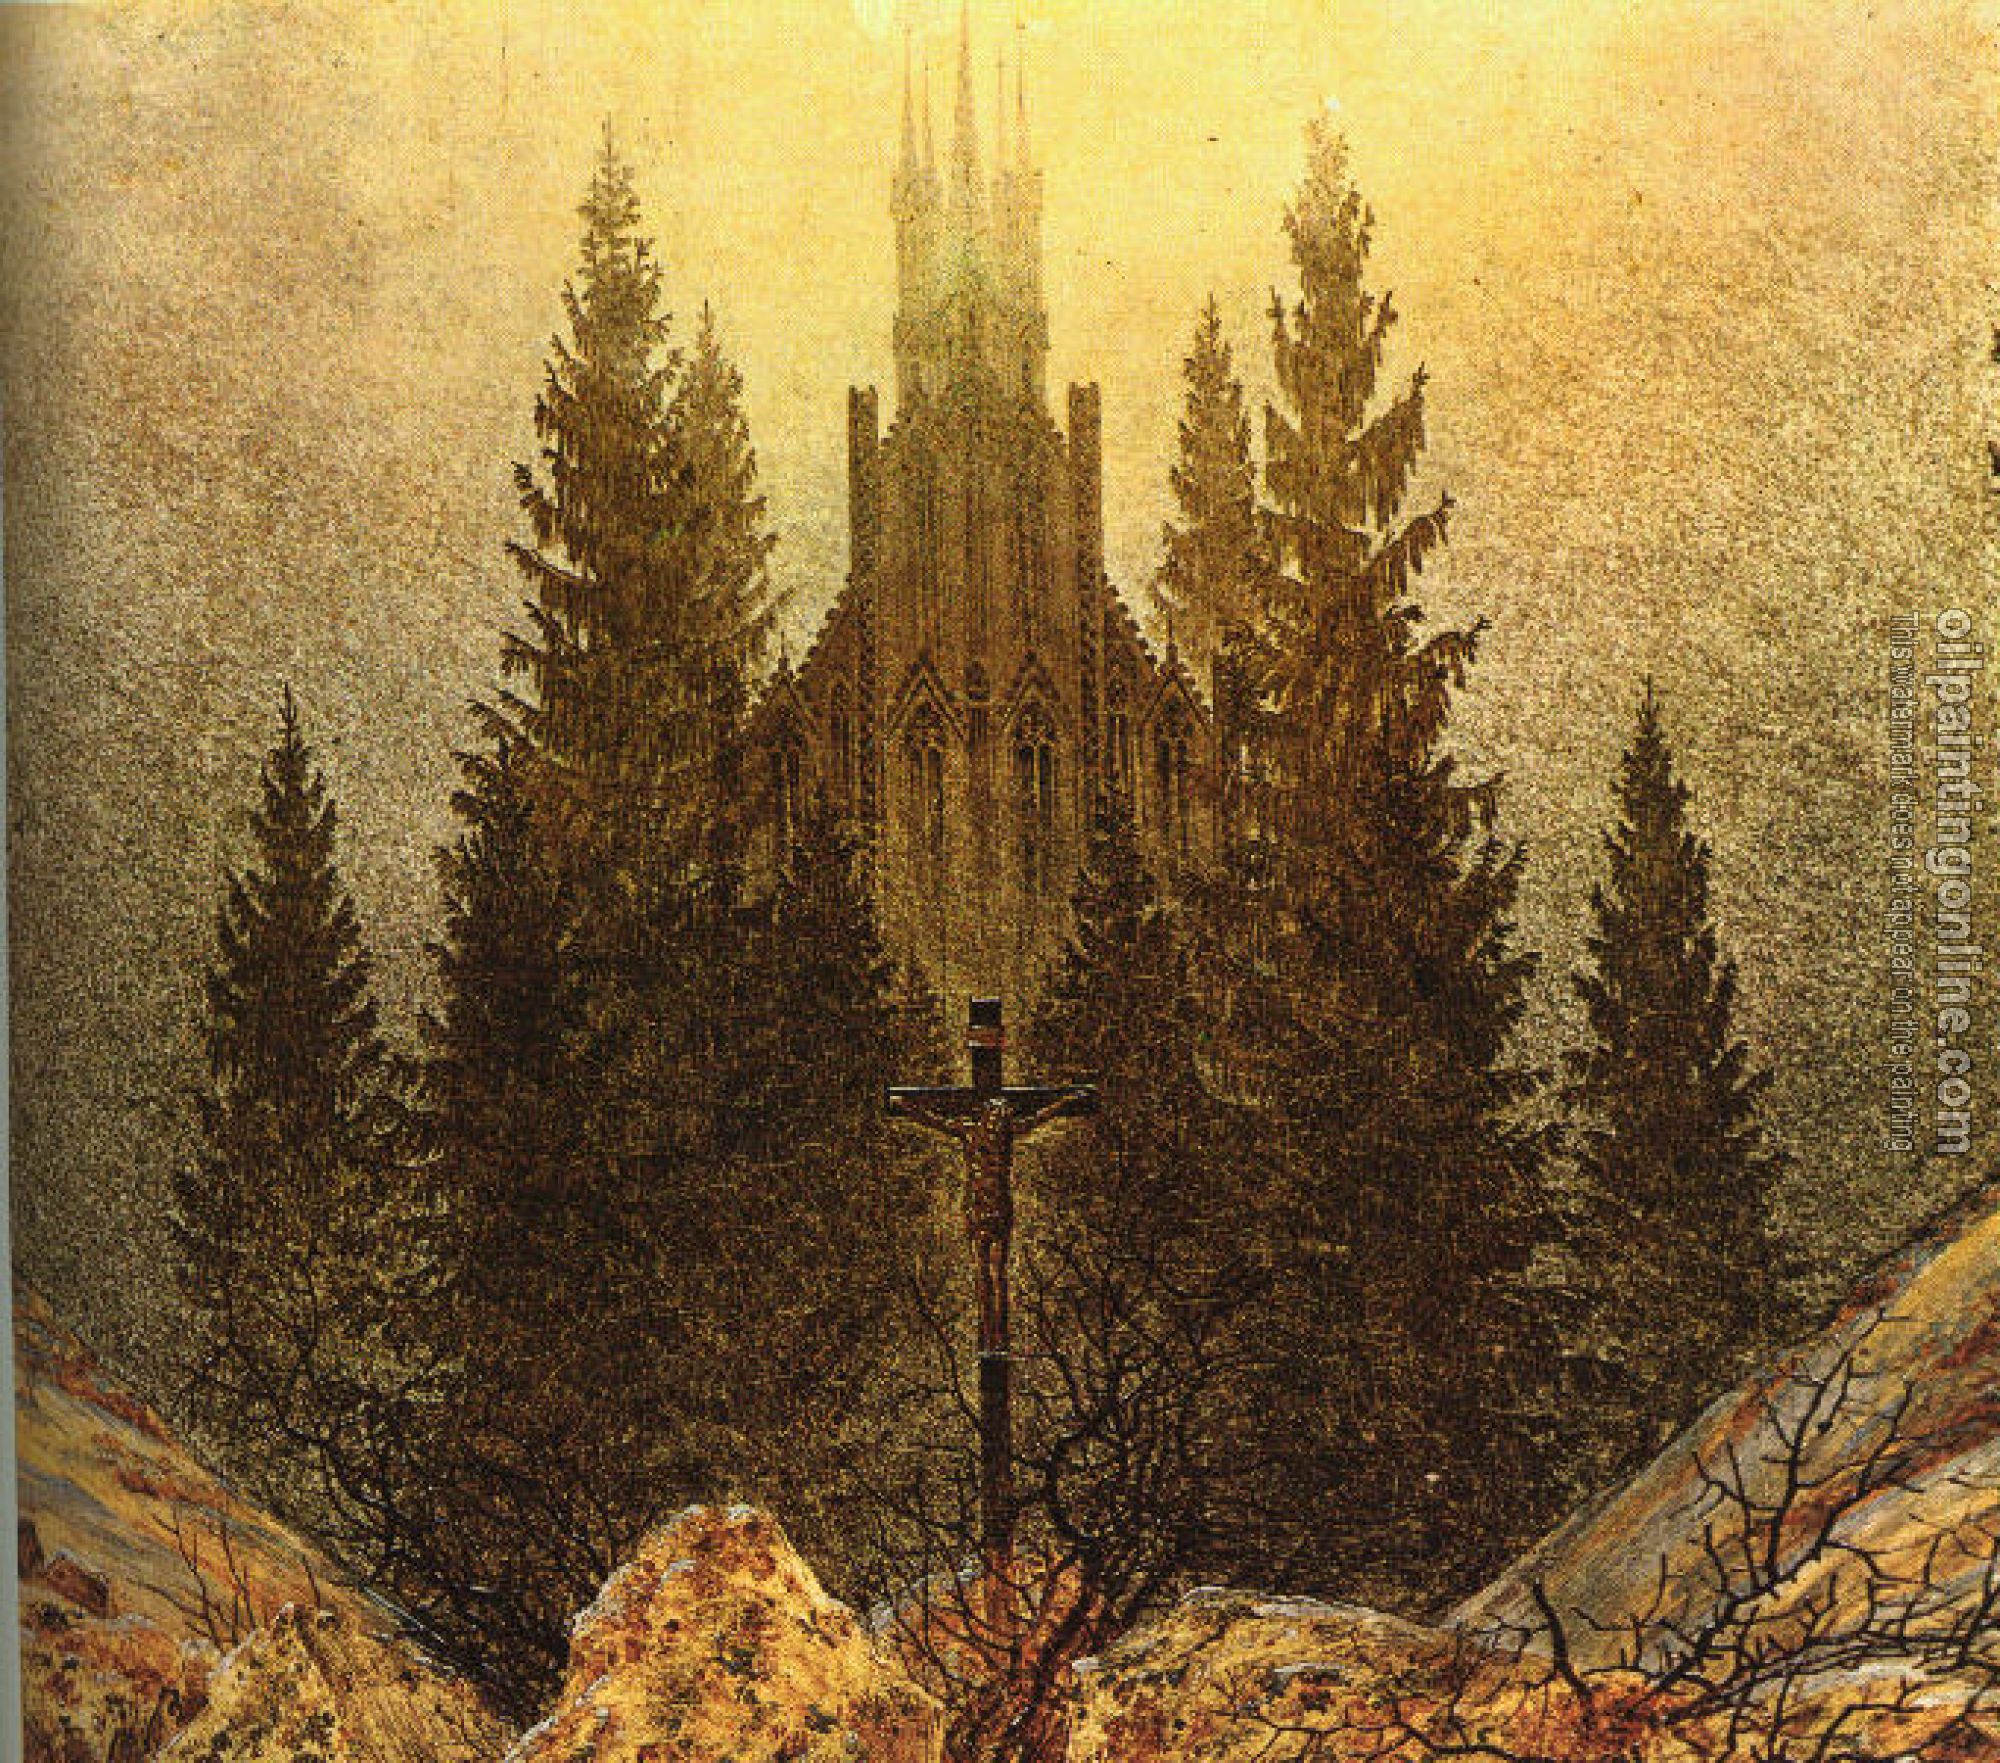 Friedrich, Caspar David - The Cross on the Mountain